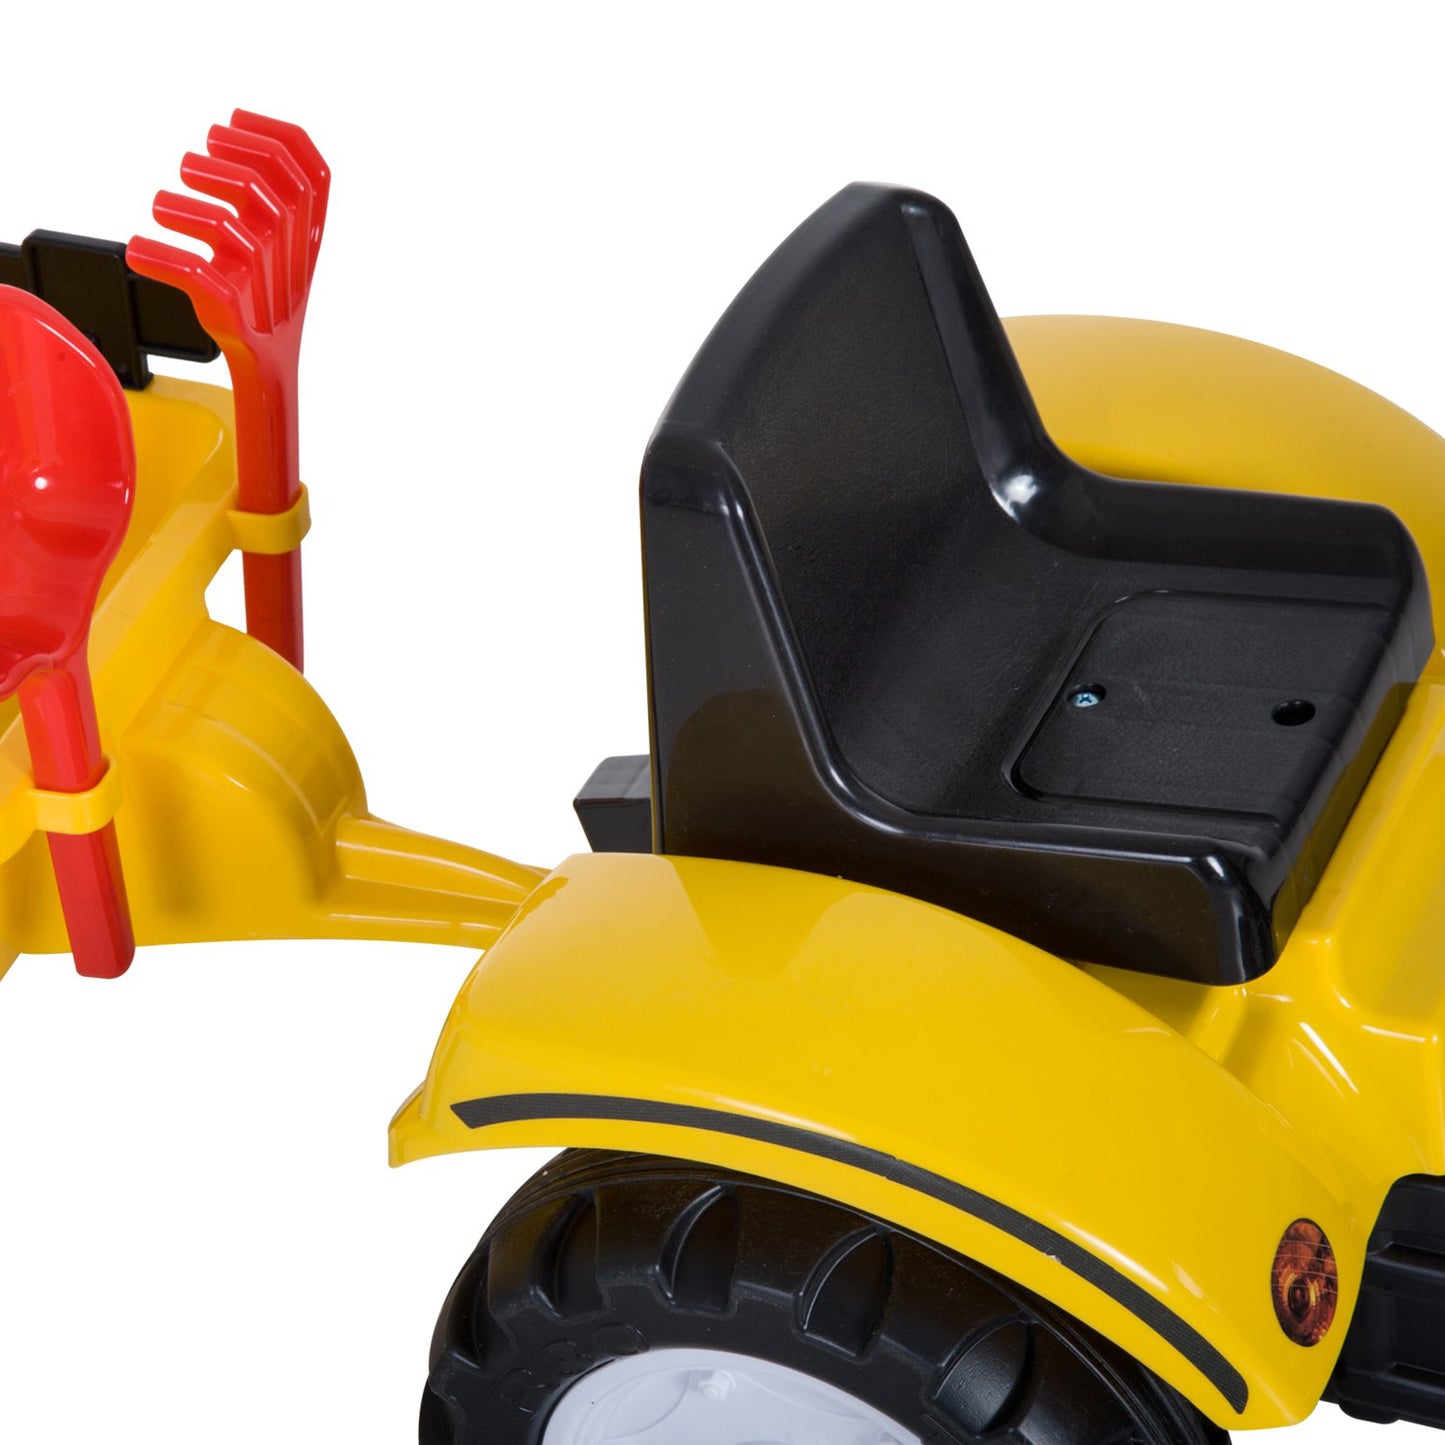 HOMCOM Kids Pedal Go Kart Excavator-Yellow